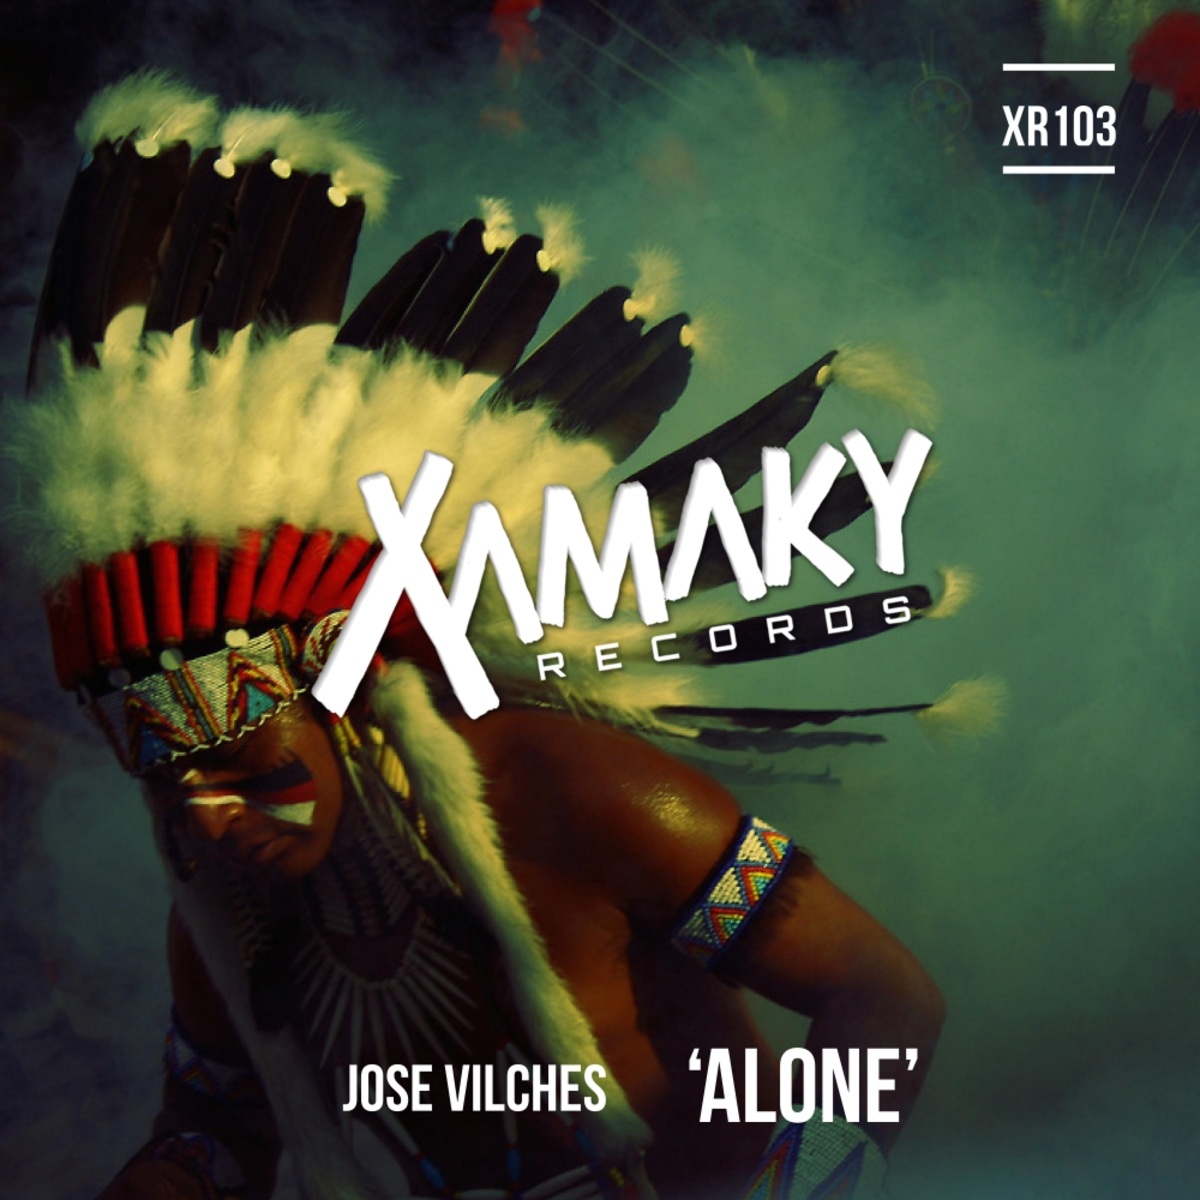 Jose Vilches - Alone / Xamaky Records